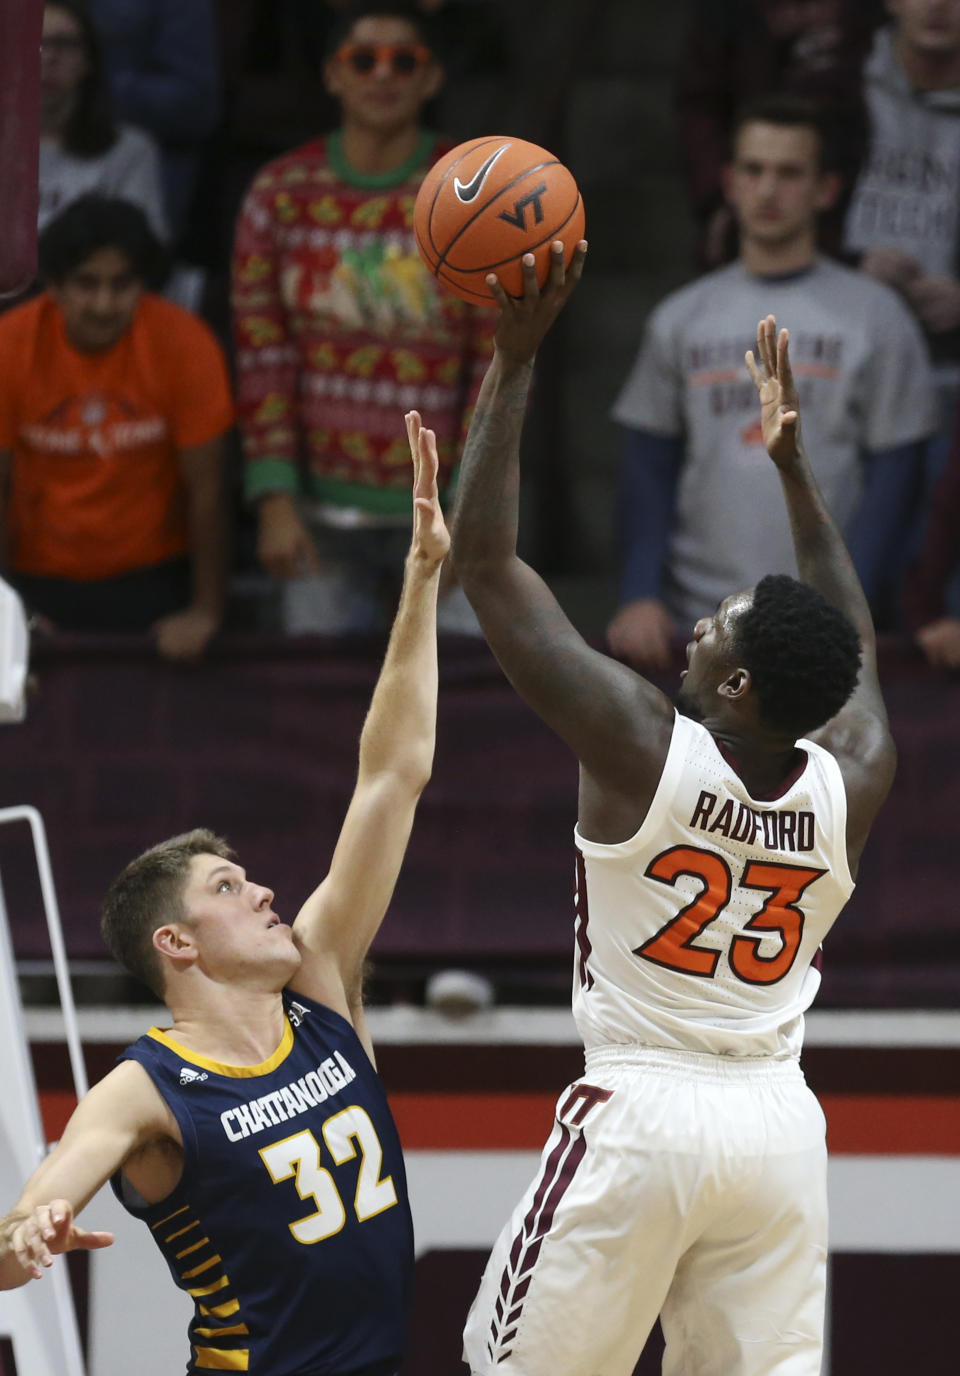 Virginia Tech's Tyrece Radford (23) shoots over Chattanooga's Matt Ryan (32) in the first half of an NCAA college basketball game, Wednesday, Dec. 11, 2019, in Blacksburg, Va. (Matt Gentry/The Roanoke Times via AP)